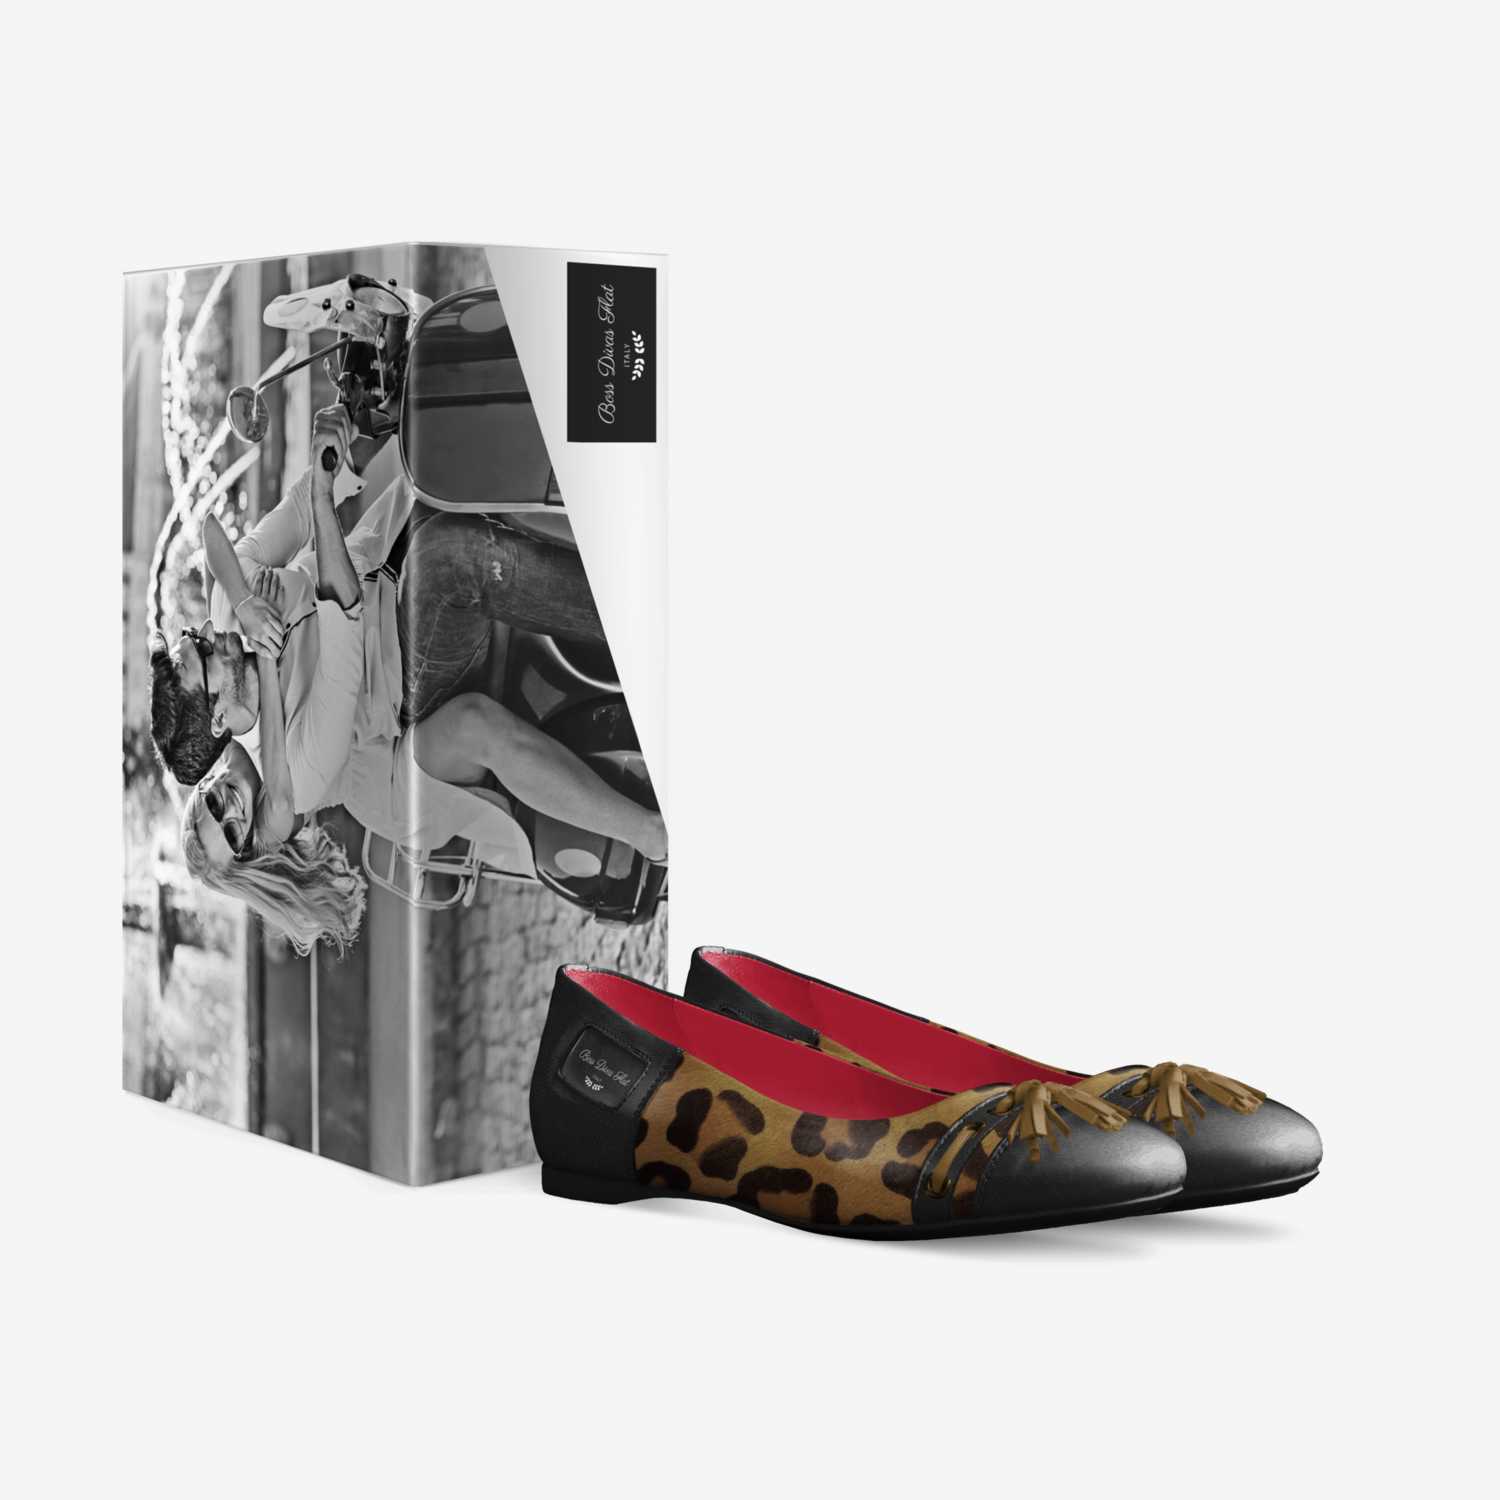 Boss Divas Flat custom made in Italy shoes by Leesa Robinson | Box view